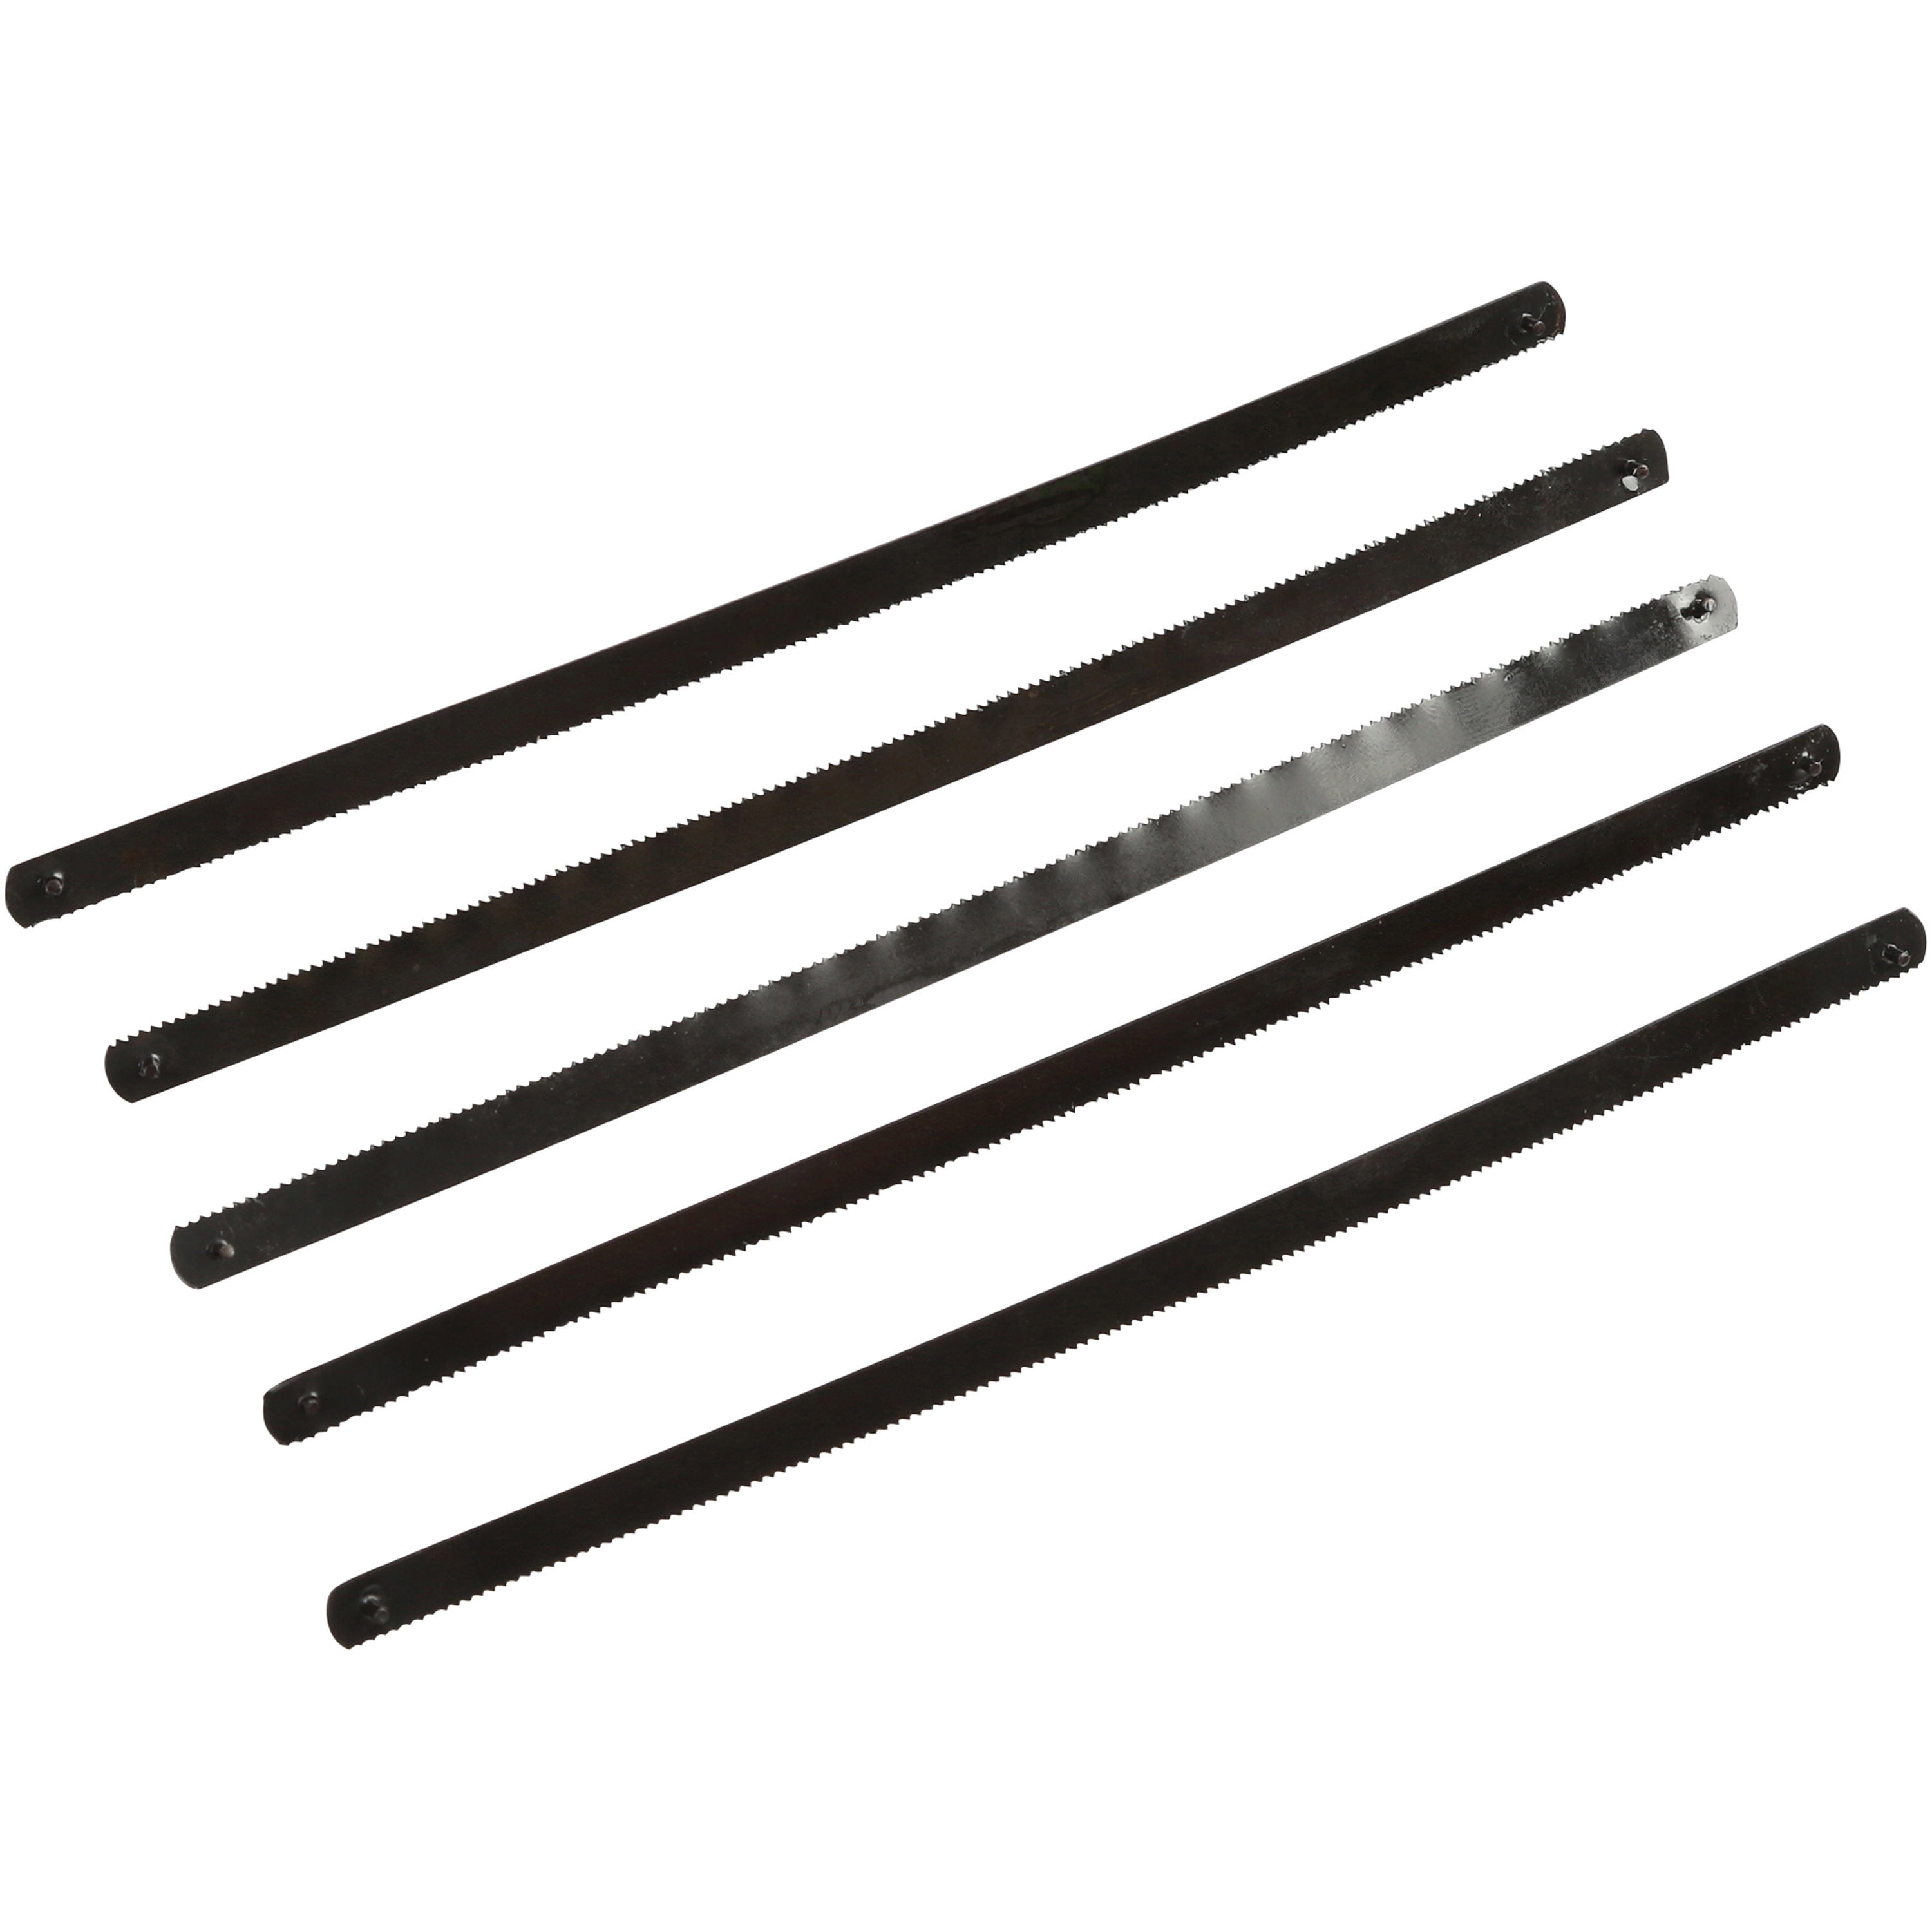 Hyper Tough 6-Inch Mini Hacksaw Replacement Blades, 5-Piece